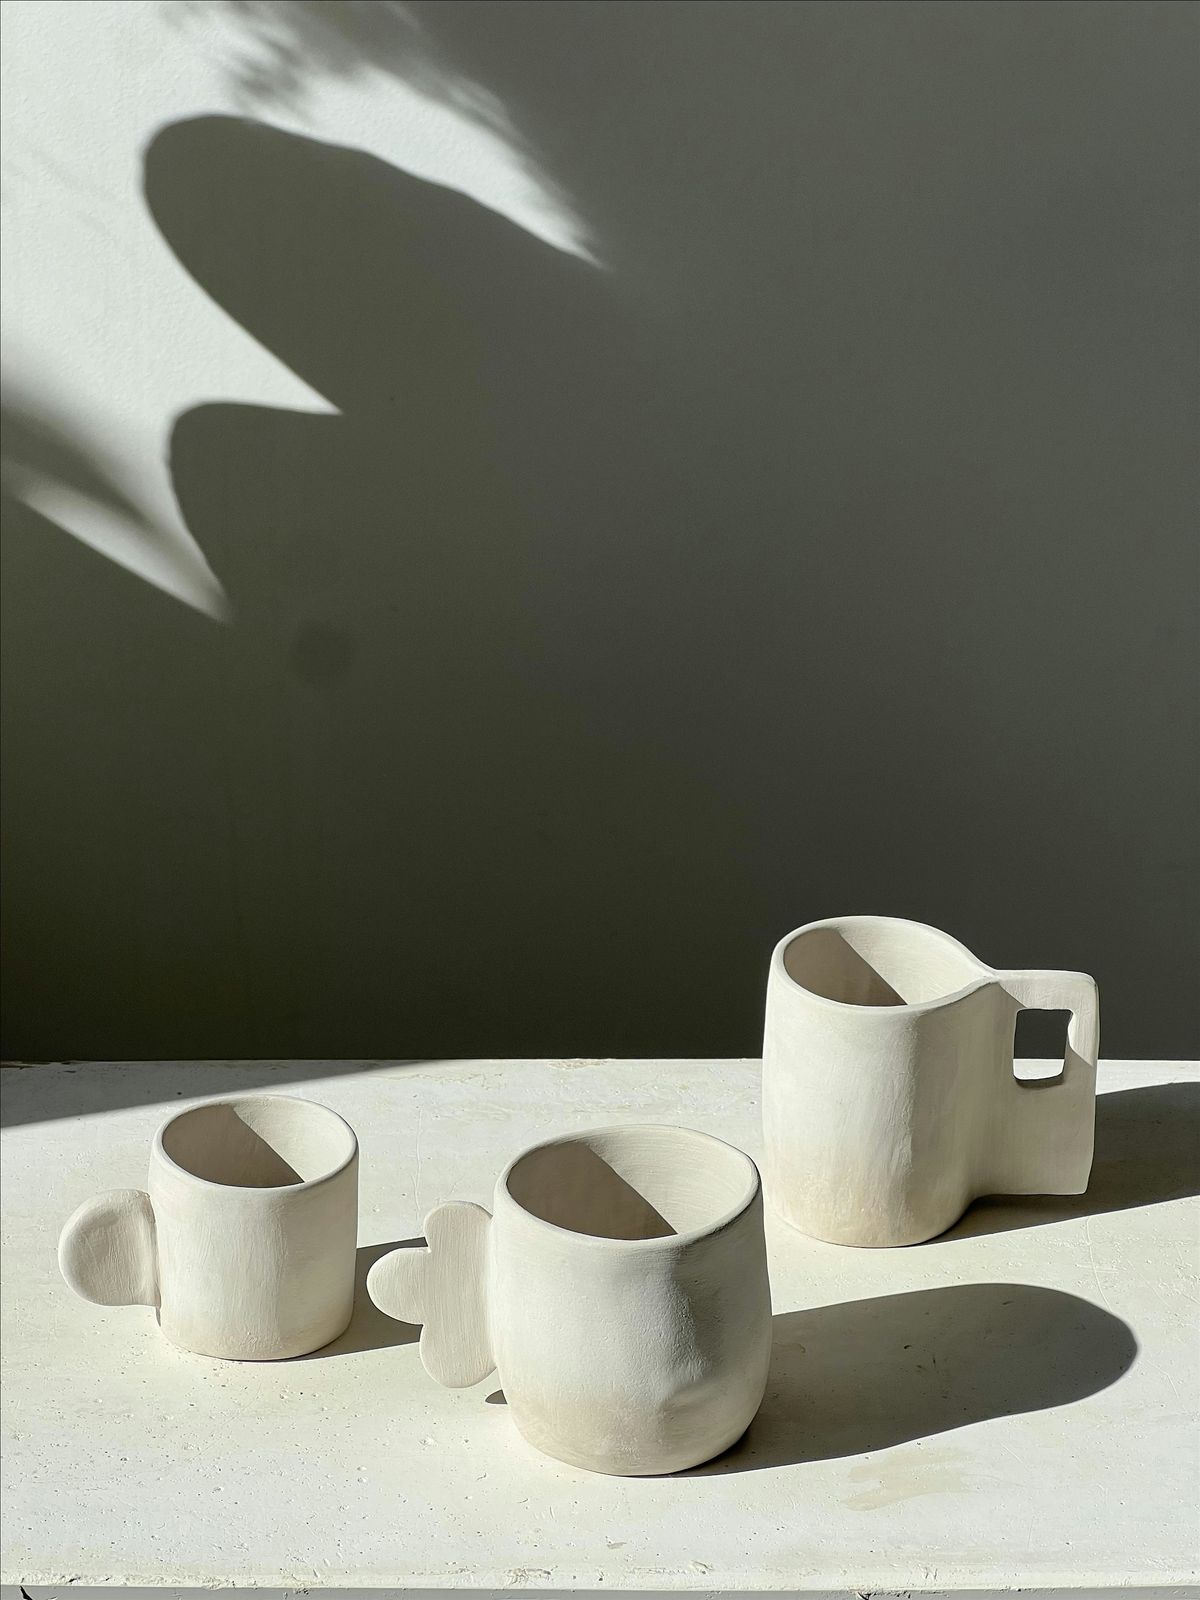 Father's Day Intro Pottery Class - Coffee Mug Ceramic Pottery Class